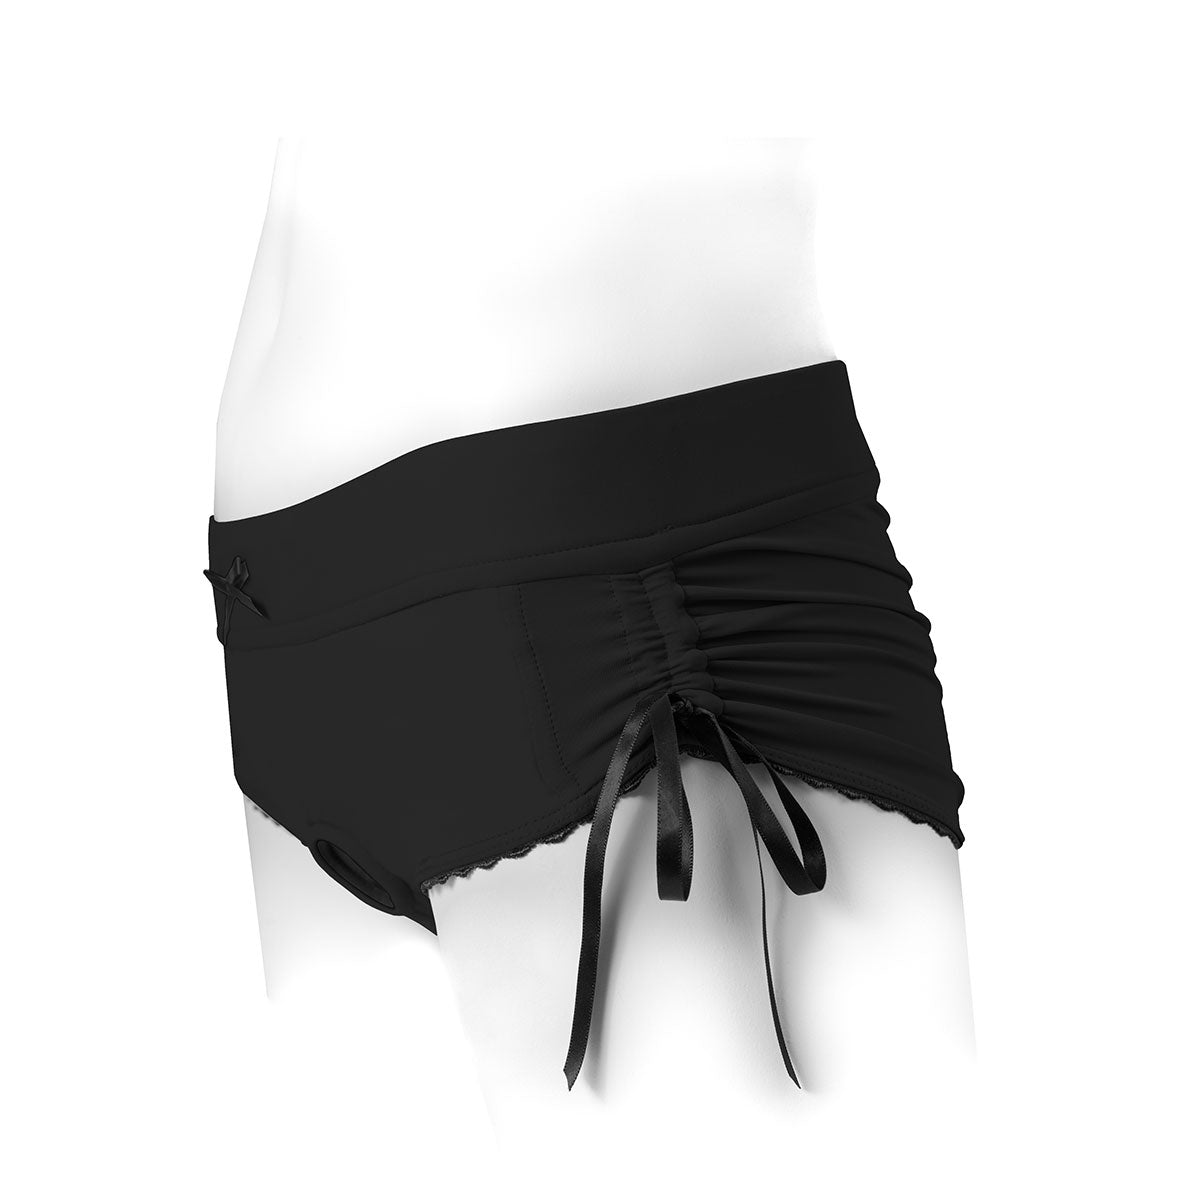 Sasha Couture Harness Lingerie - Strap-On Vibrator